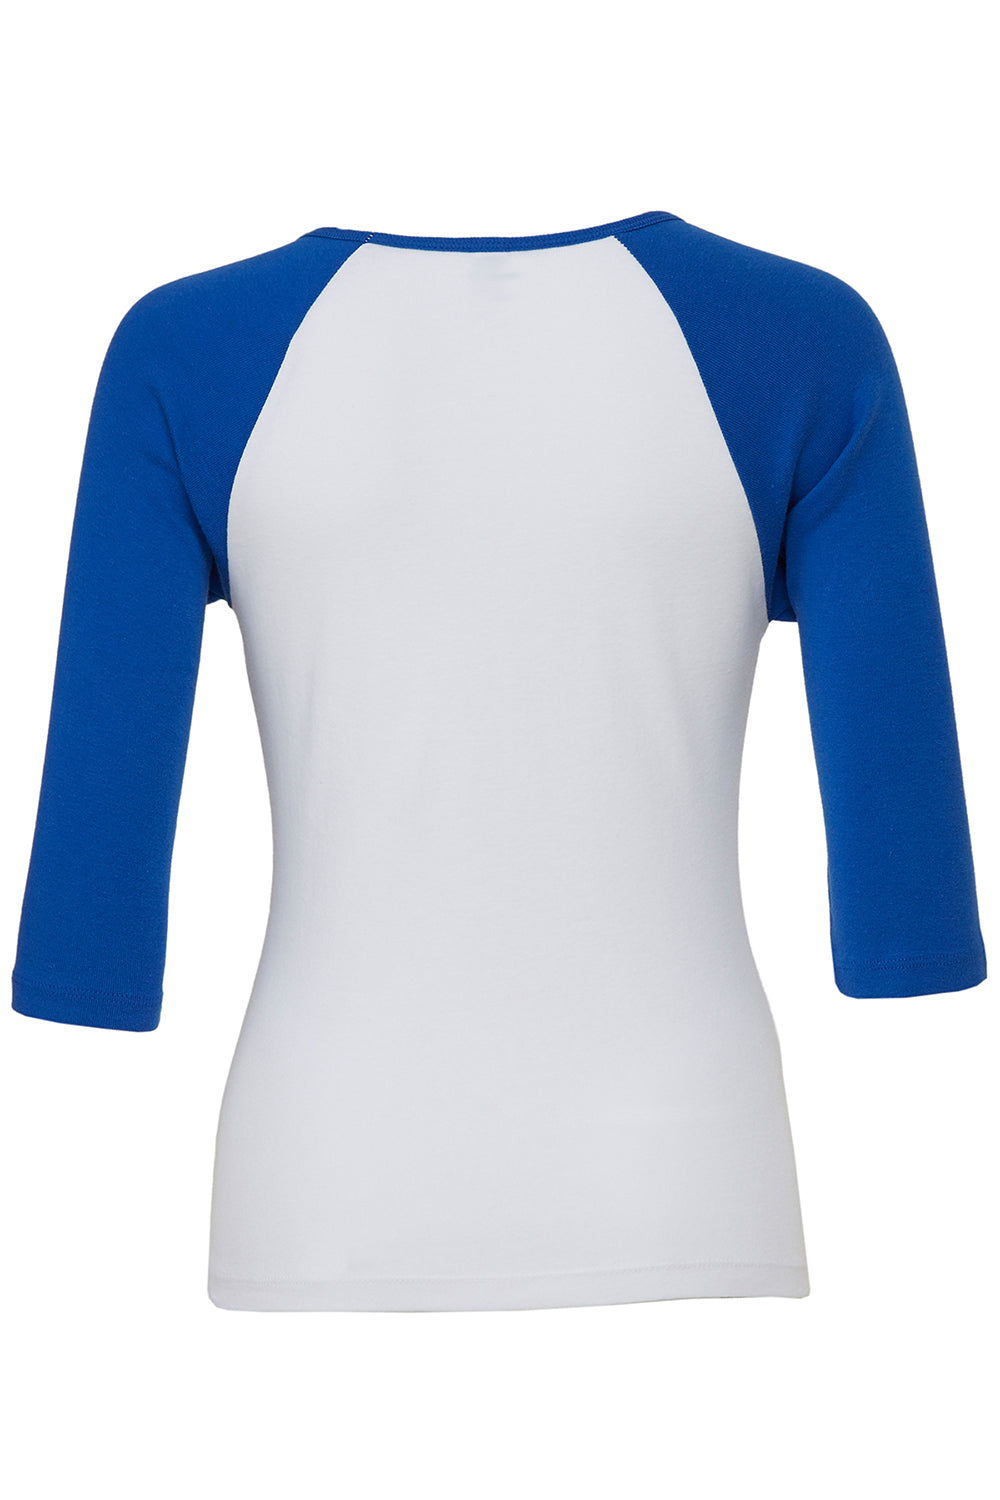 Bella + Canvas B2000/2000 Womens 3/4 Sleeve Crewneck T-Shirt White/True Royal Blue Flat Back